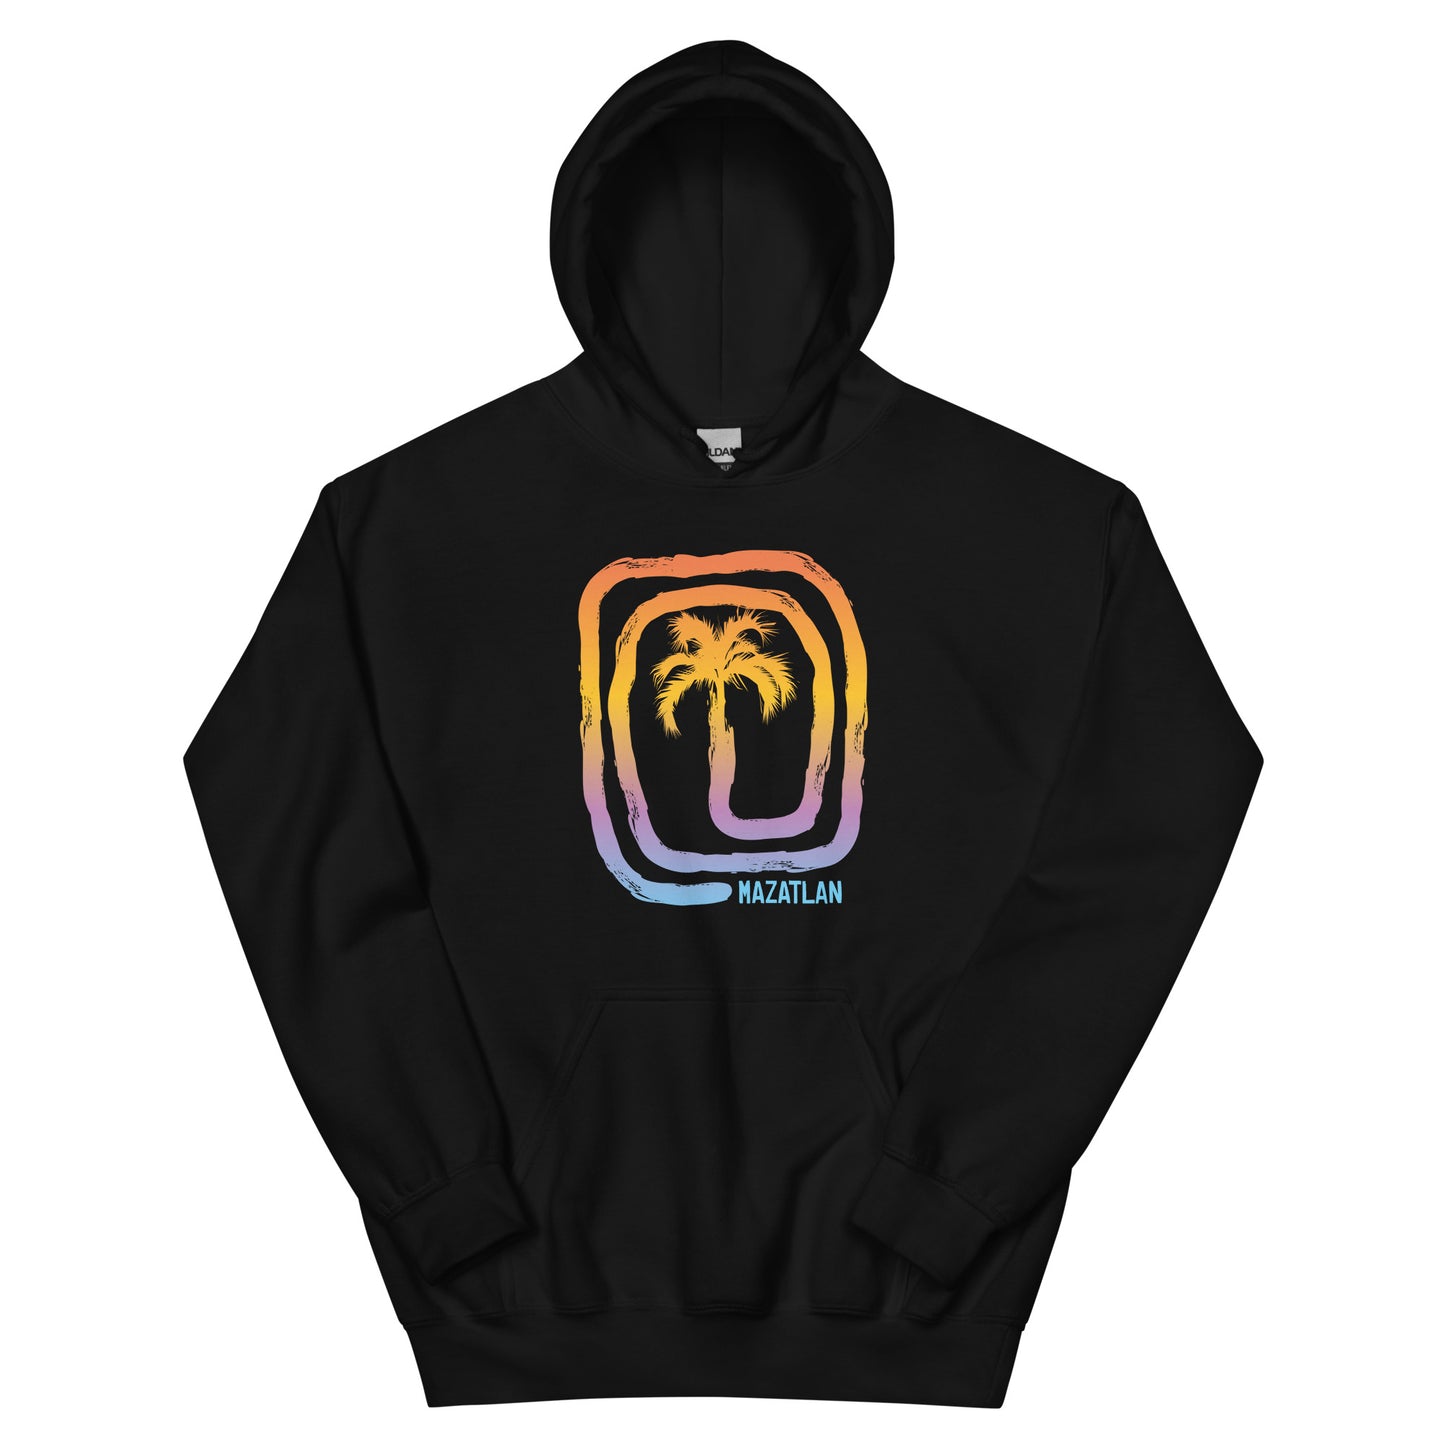 Cool Mazatlan Mexico Palm Tree Souvenir Vacation Unisex Hoodie Top Sweatshirt